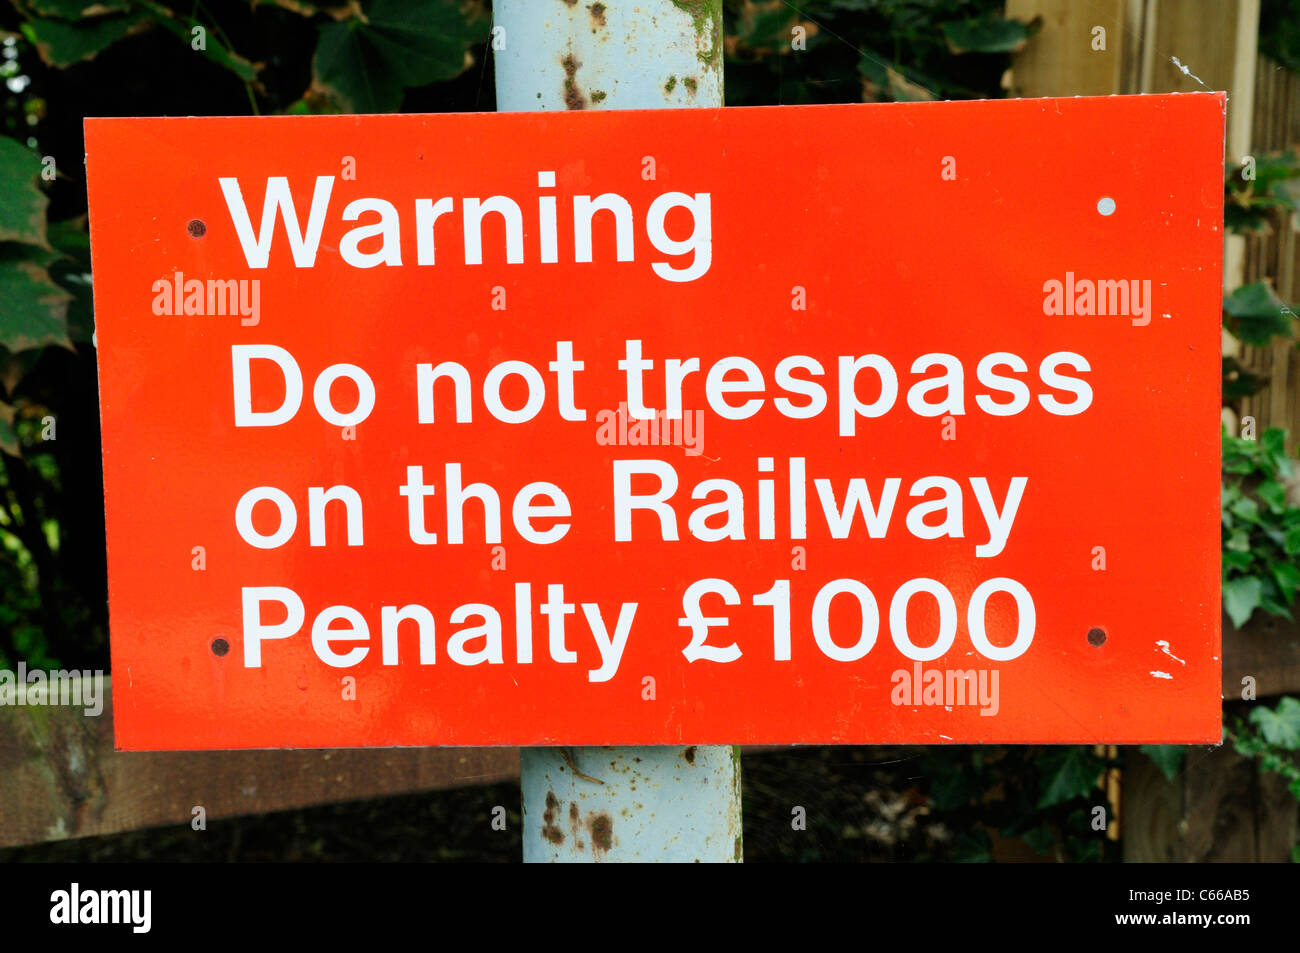 Do Not Trespass On The Railway Warning Sign, Shepreth, Cambridgeshire, England, UK Stock Photo